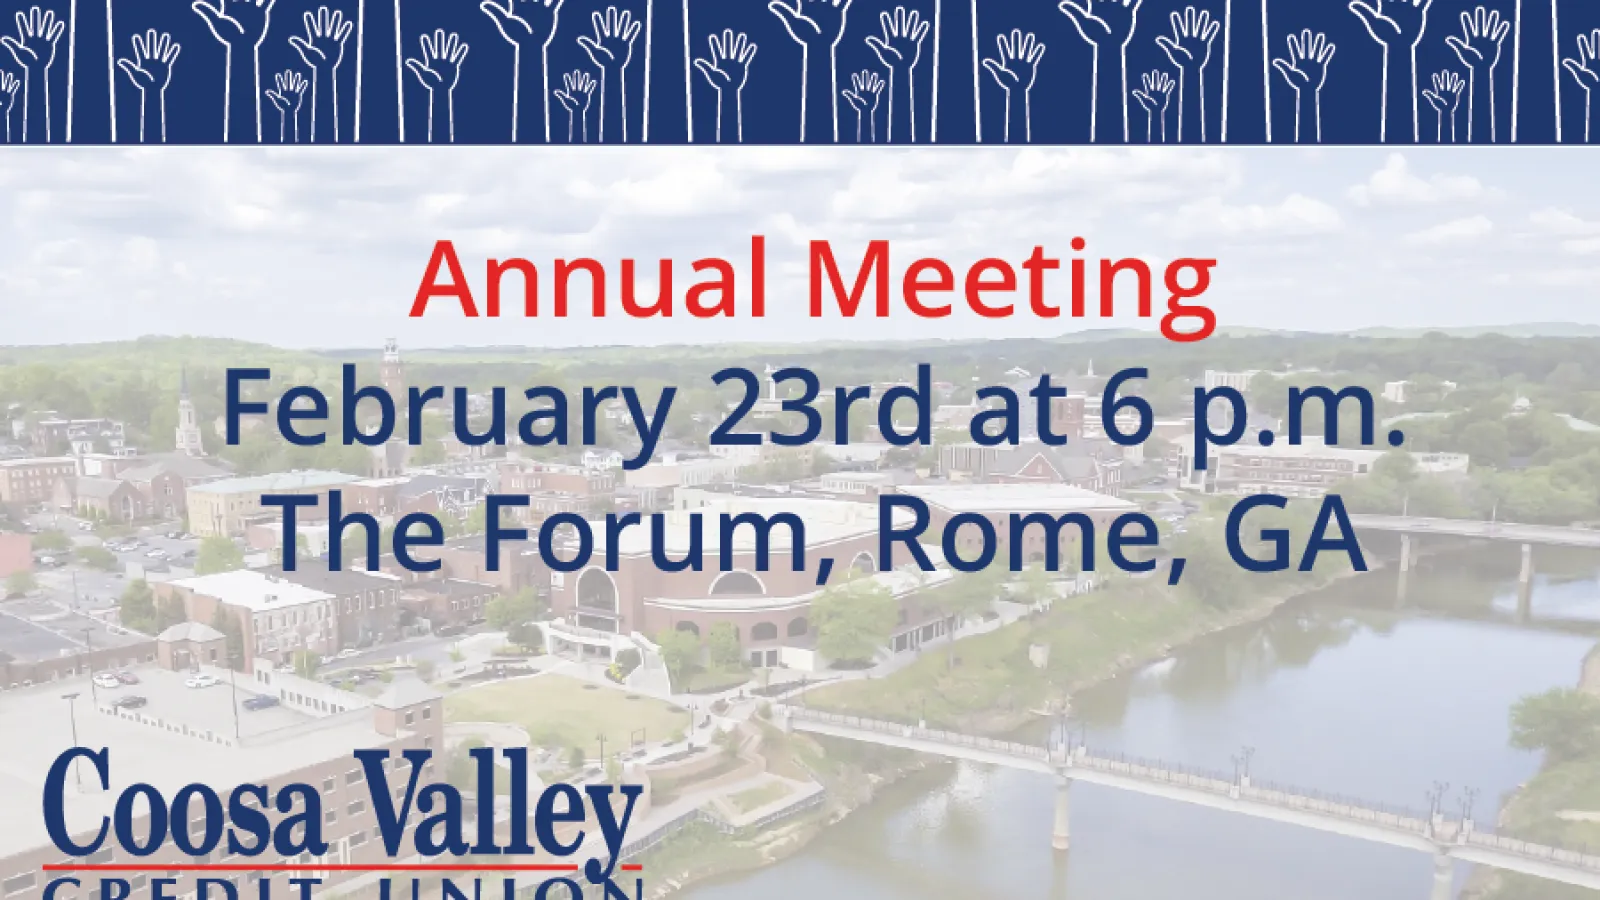 Why an Annual Meeting?